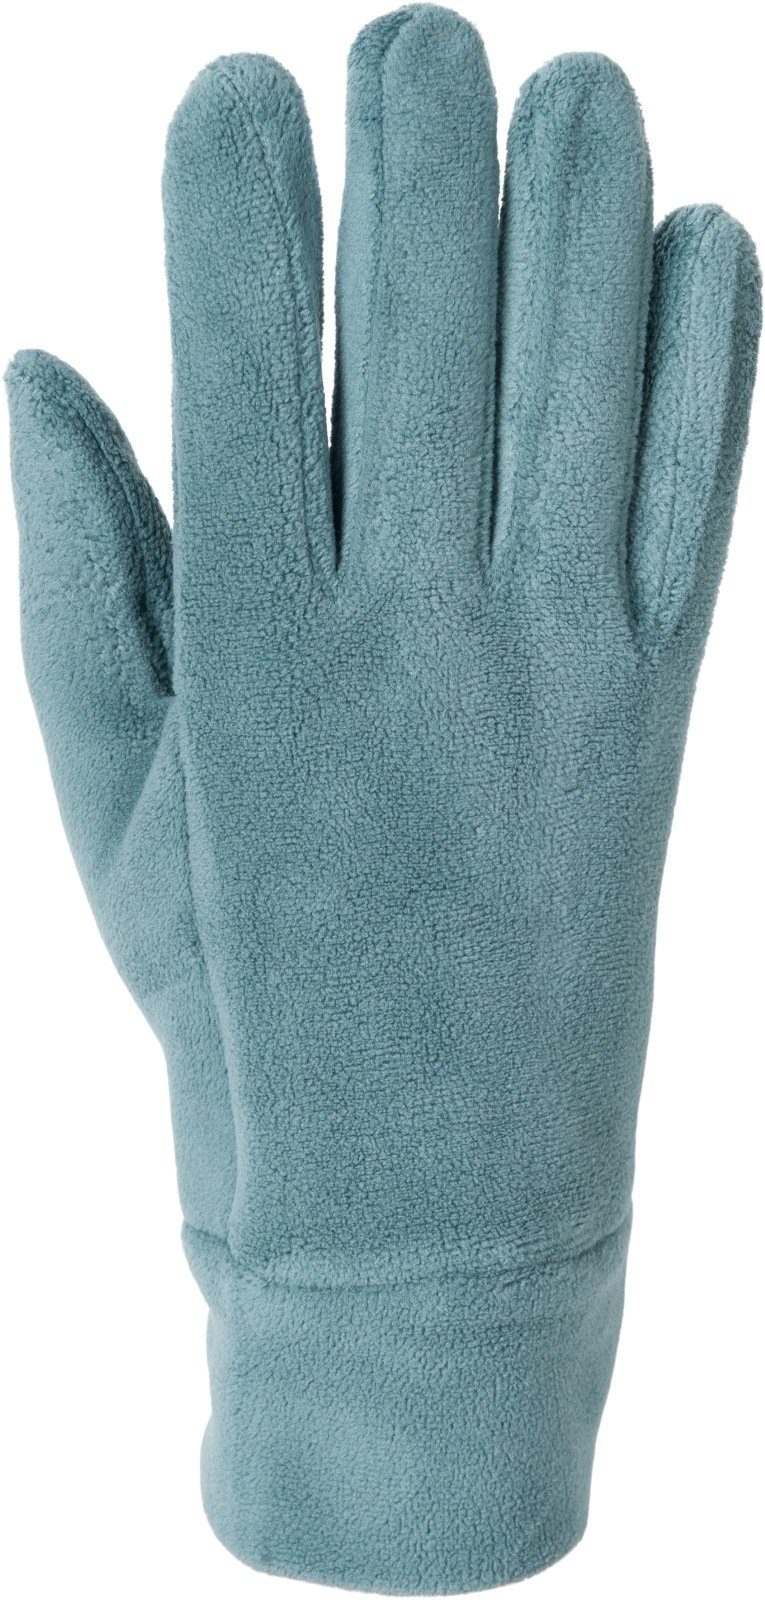 Fleecehandschuhe Taubenblau Einfarbige styleBREAKER Fleece Touchscreen Handschuhe